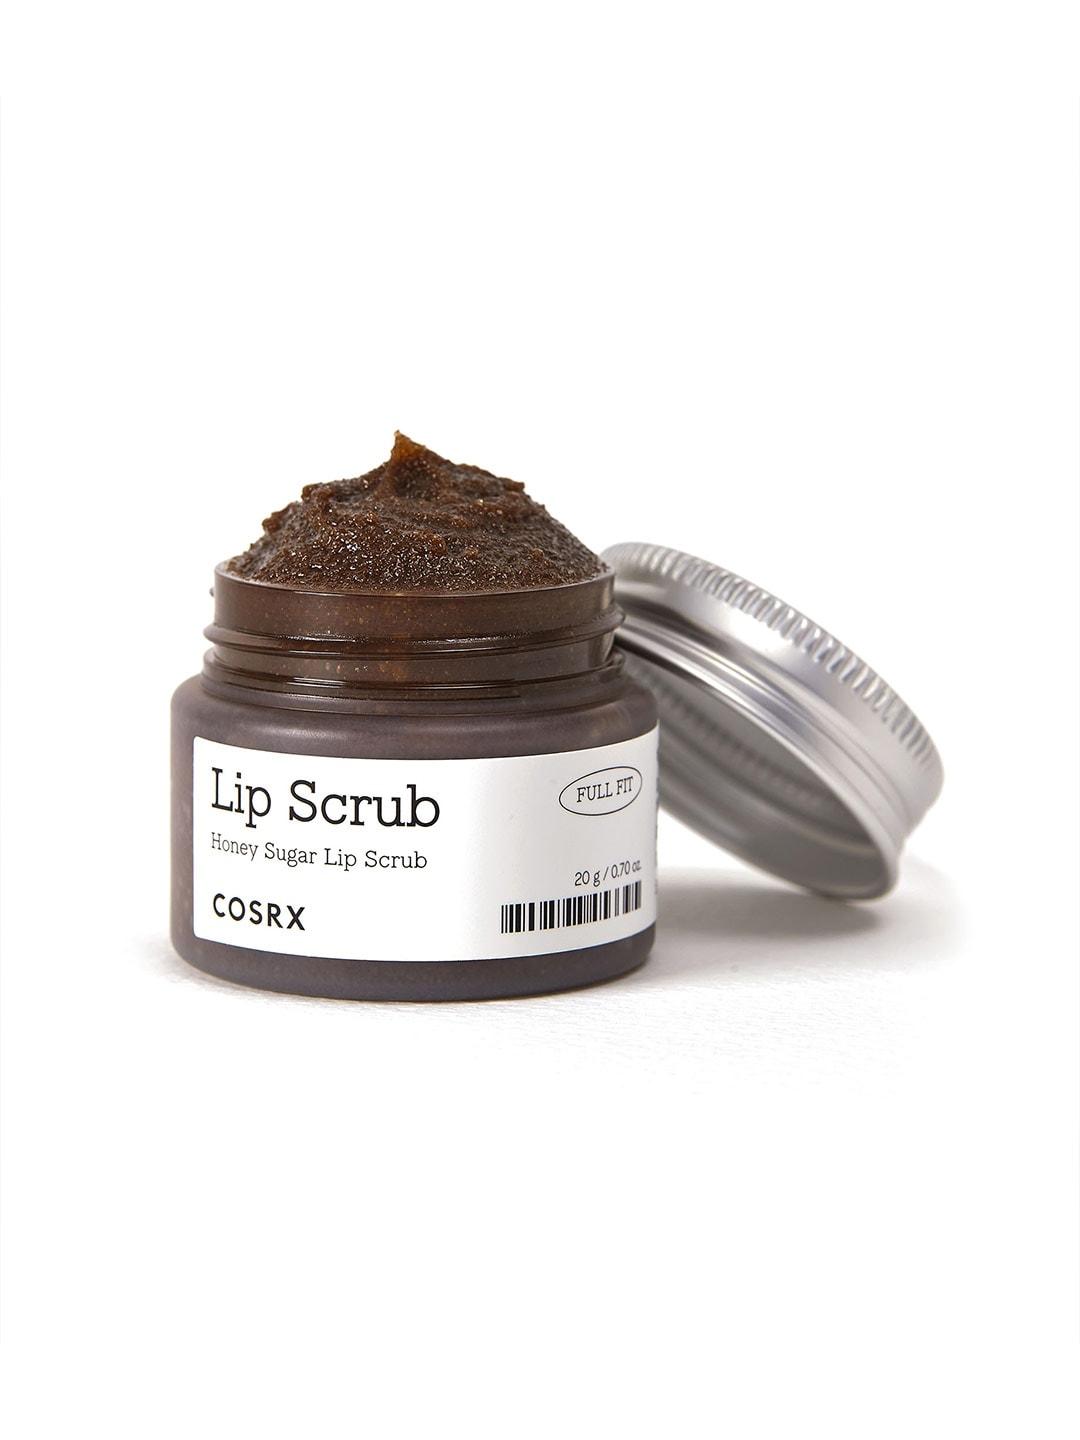 cosrx-honey-sugar-full-fit-lip-scrub-with-cocoa-extract---20-g